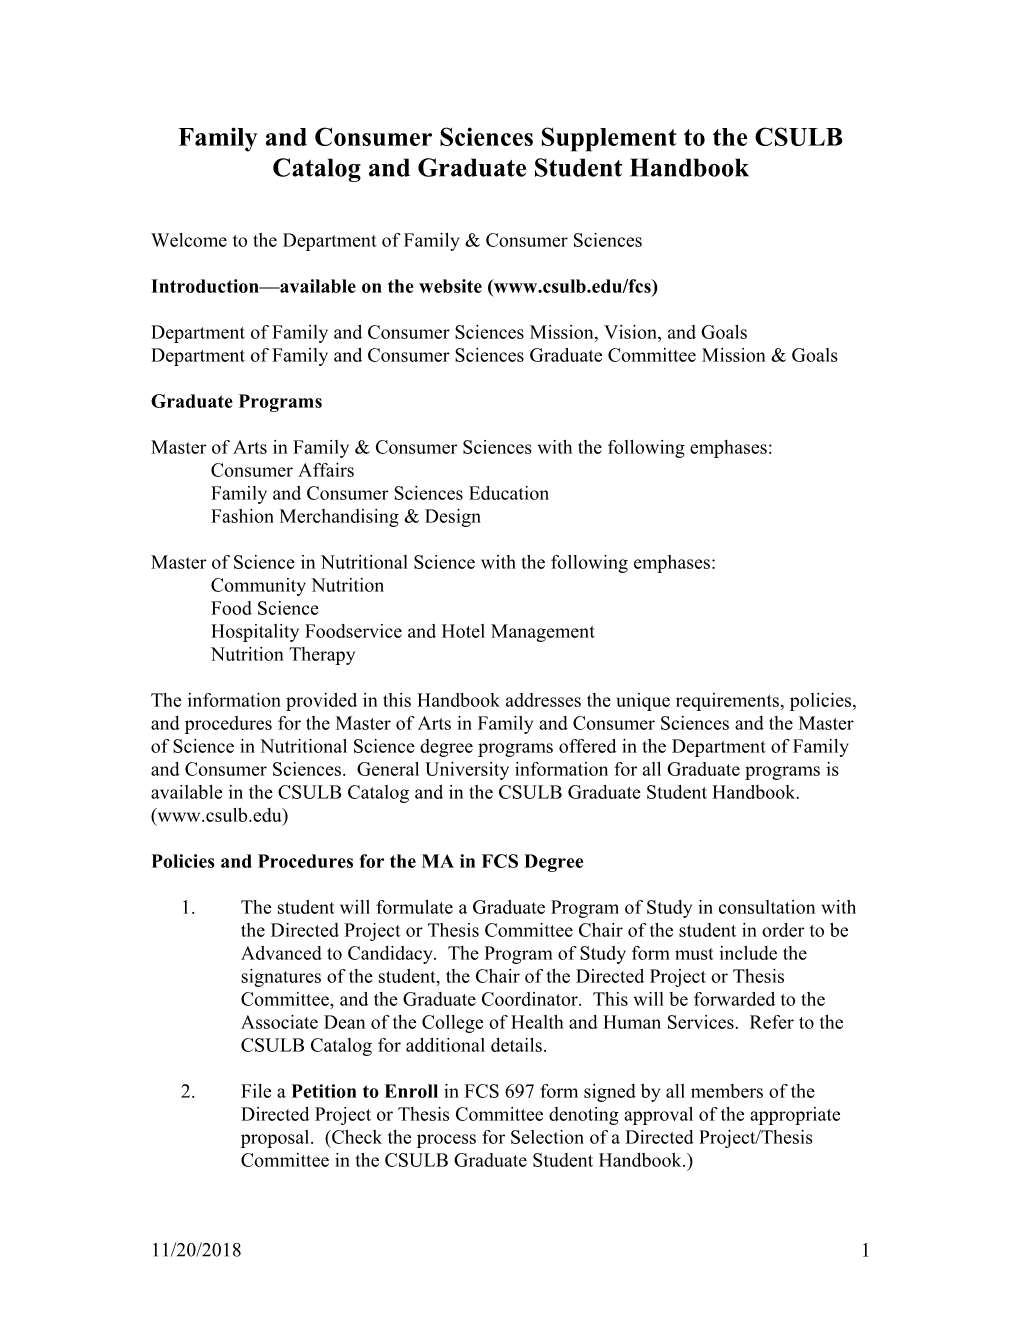 Family and Consumer Sciences Graduate Student Handbook